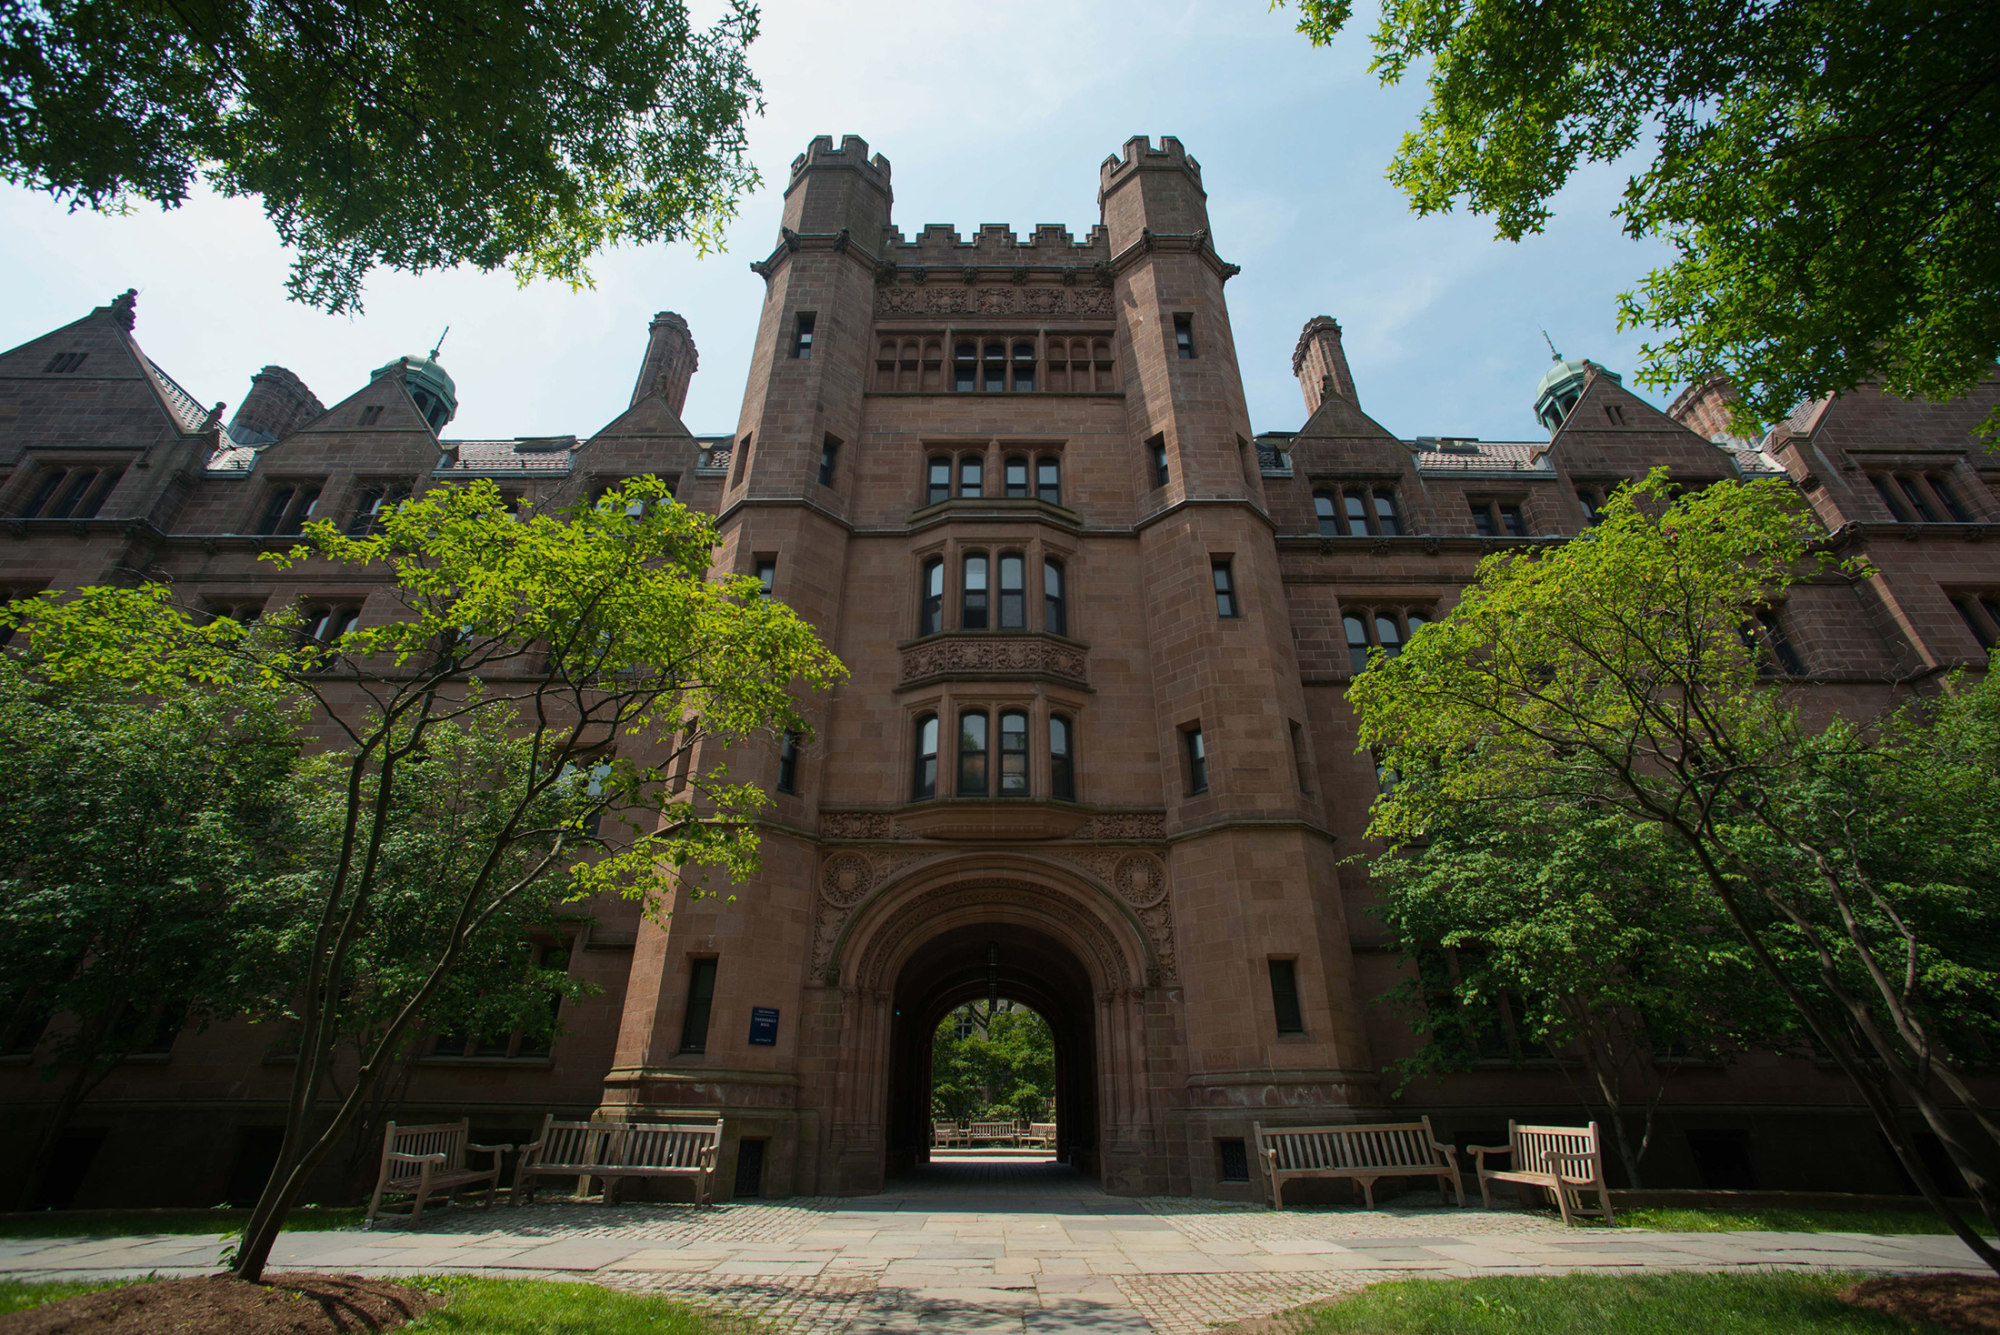 Vanderbilt Hall stands on the Yale University campus